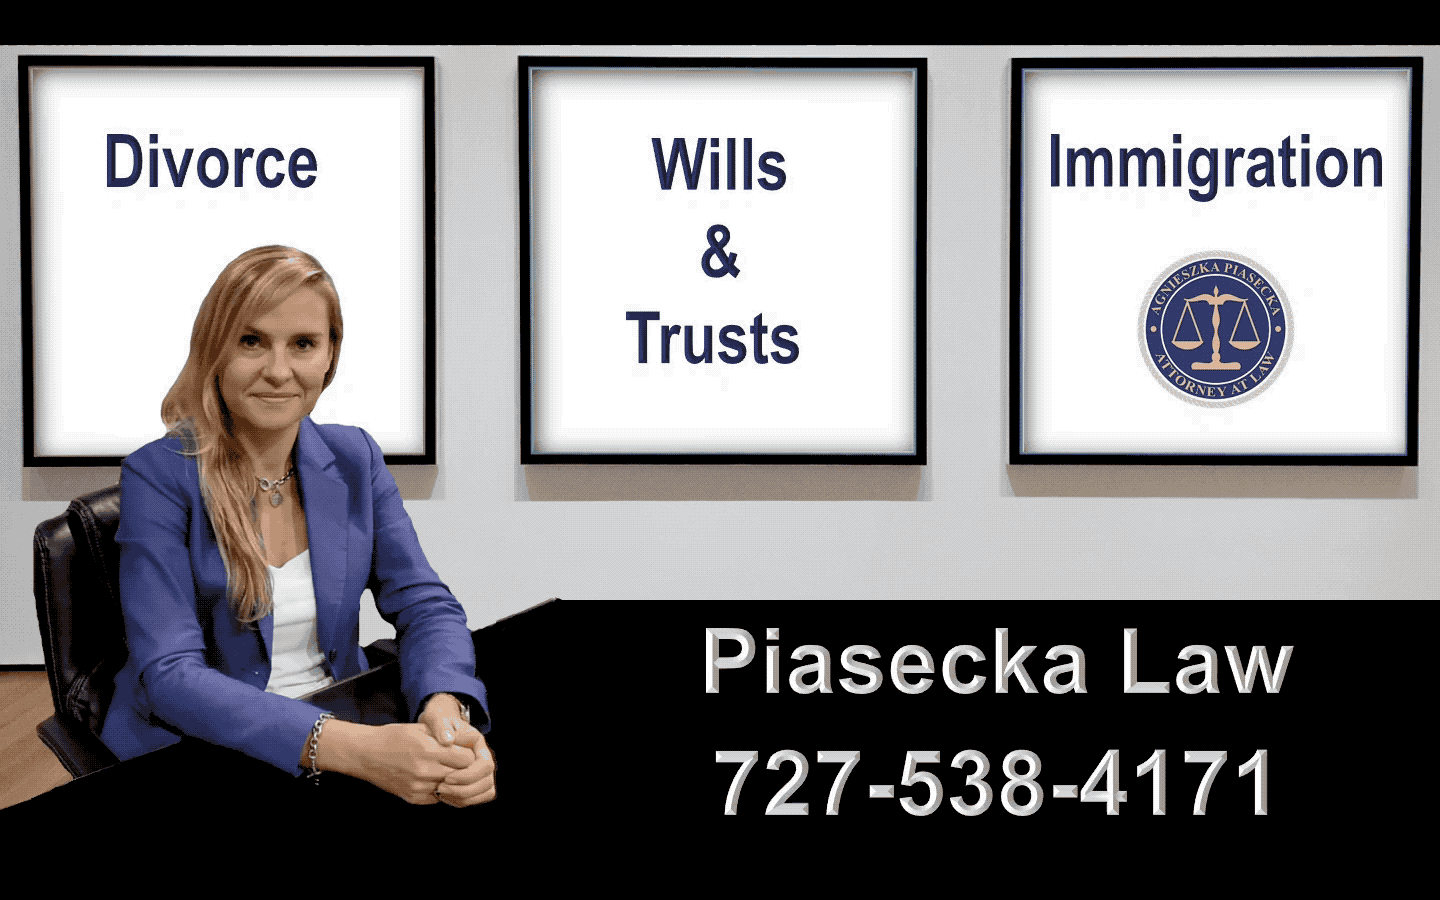 Divorce Wills & Trusts Immigration Attorney Agnieszka Aga Piasecka Law New Port Richey GIF